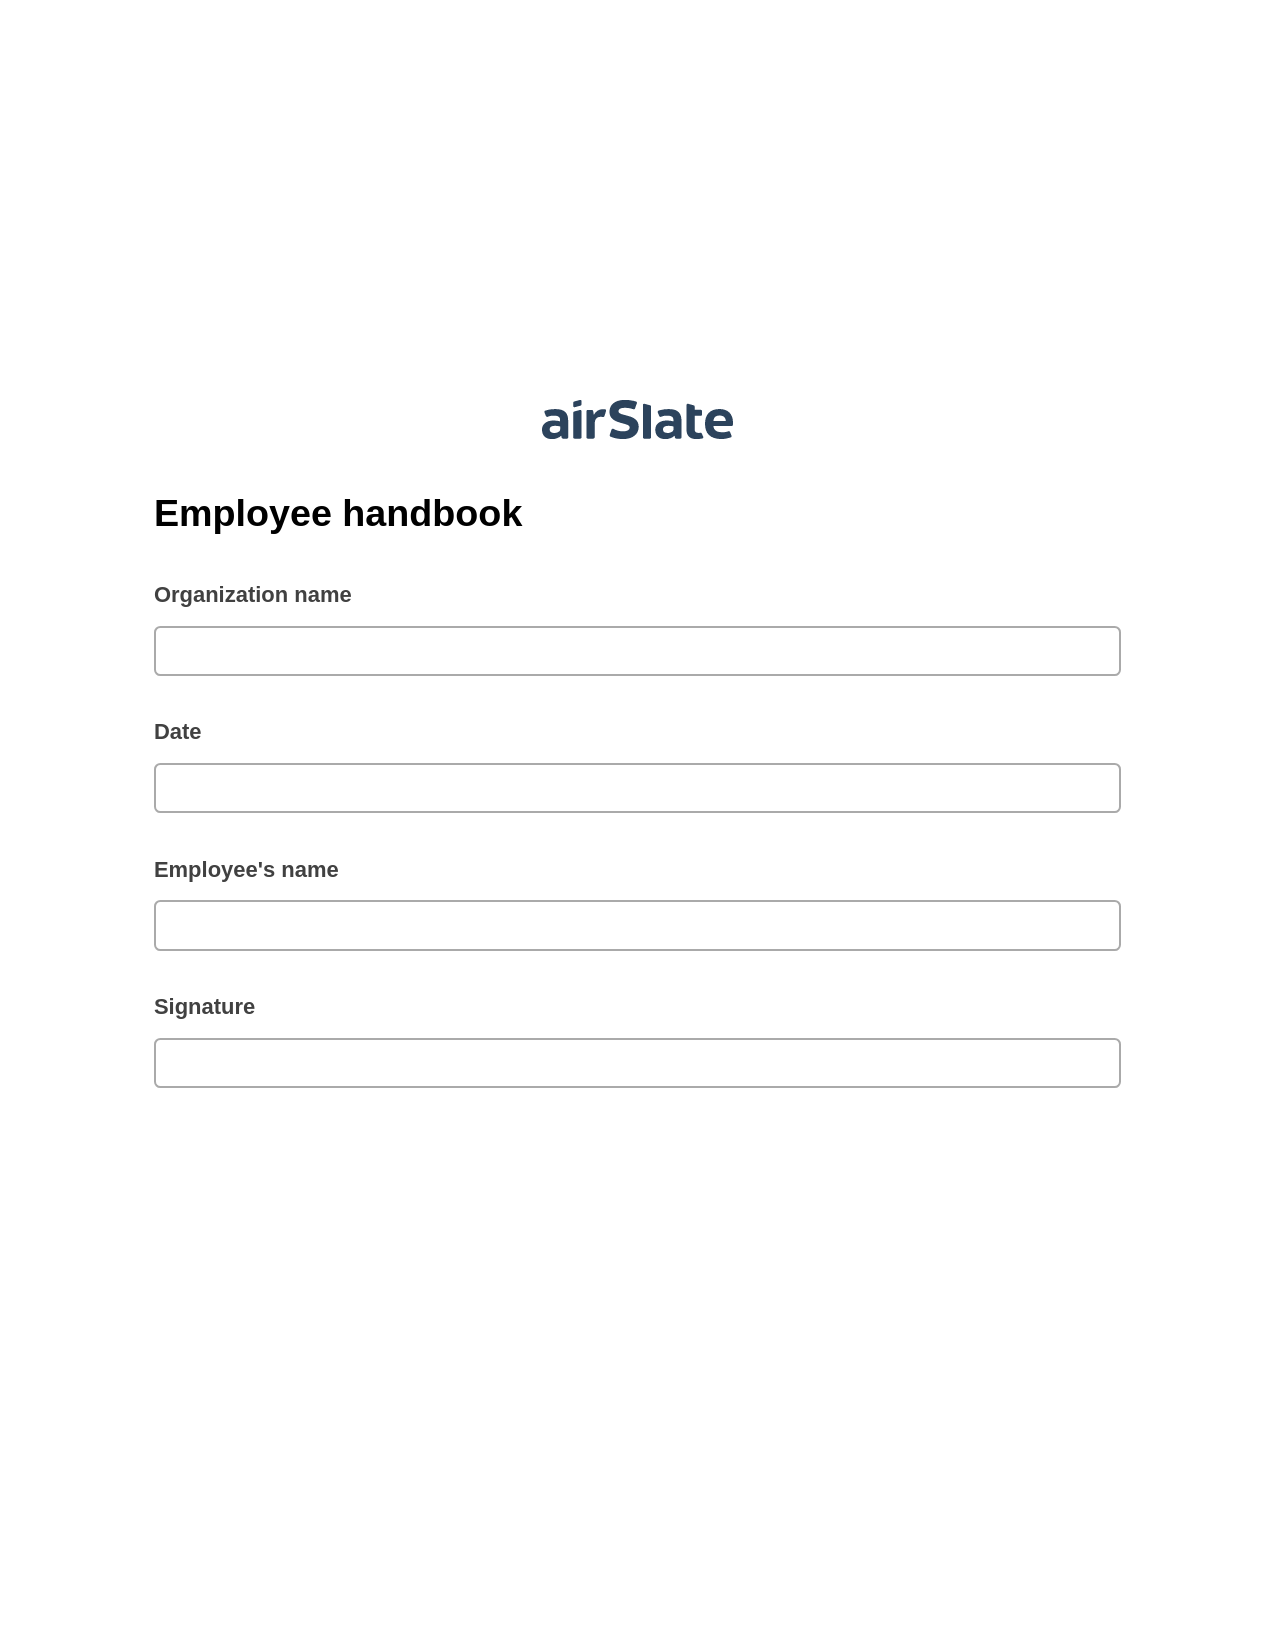 Multirole Employee handbook Pre-fill from Salesforce Record Bot, Slack Notification Bot, Export to Smartsheet